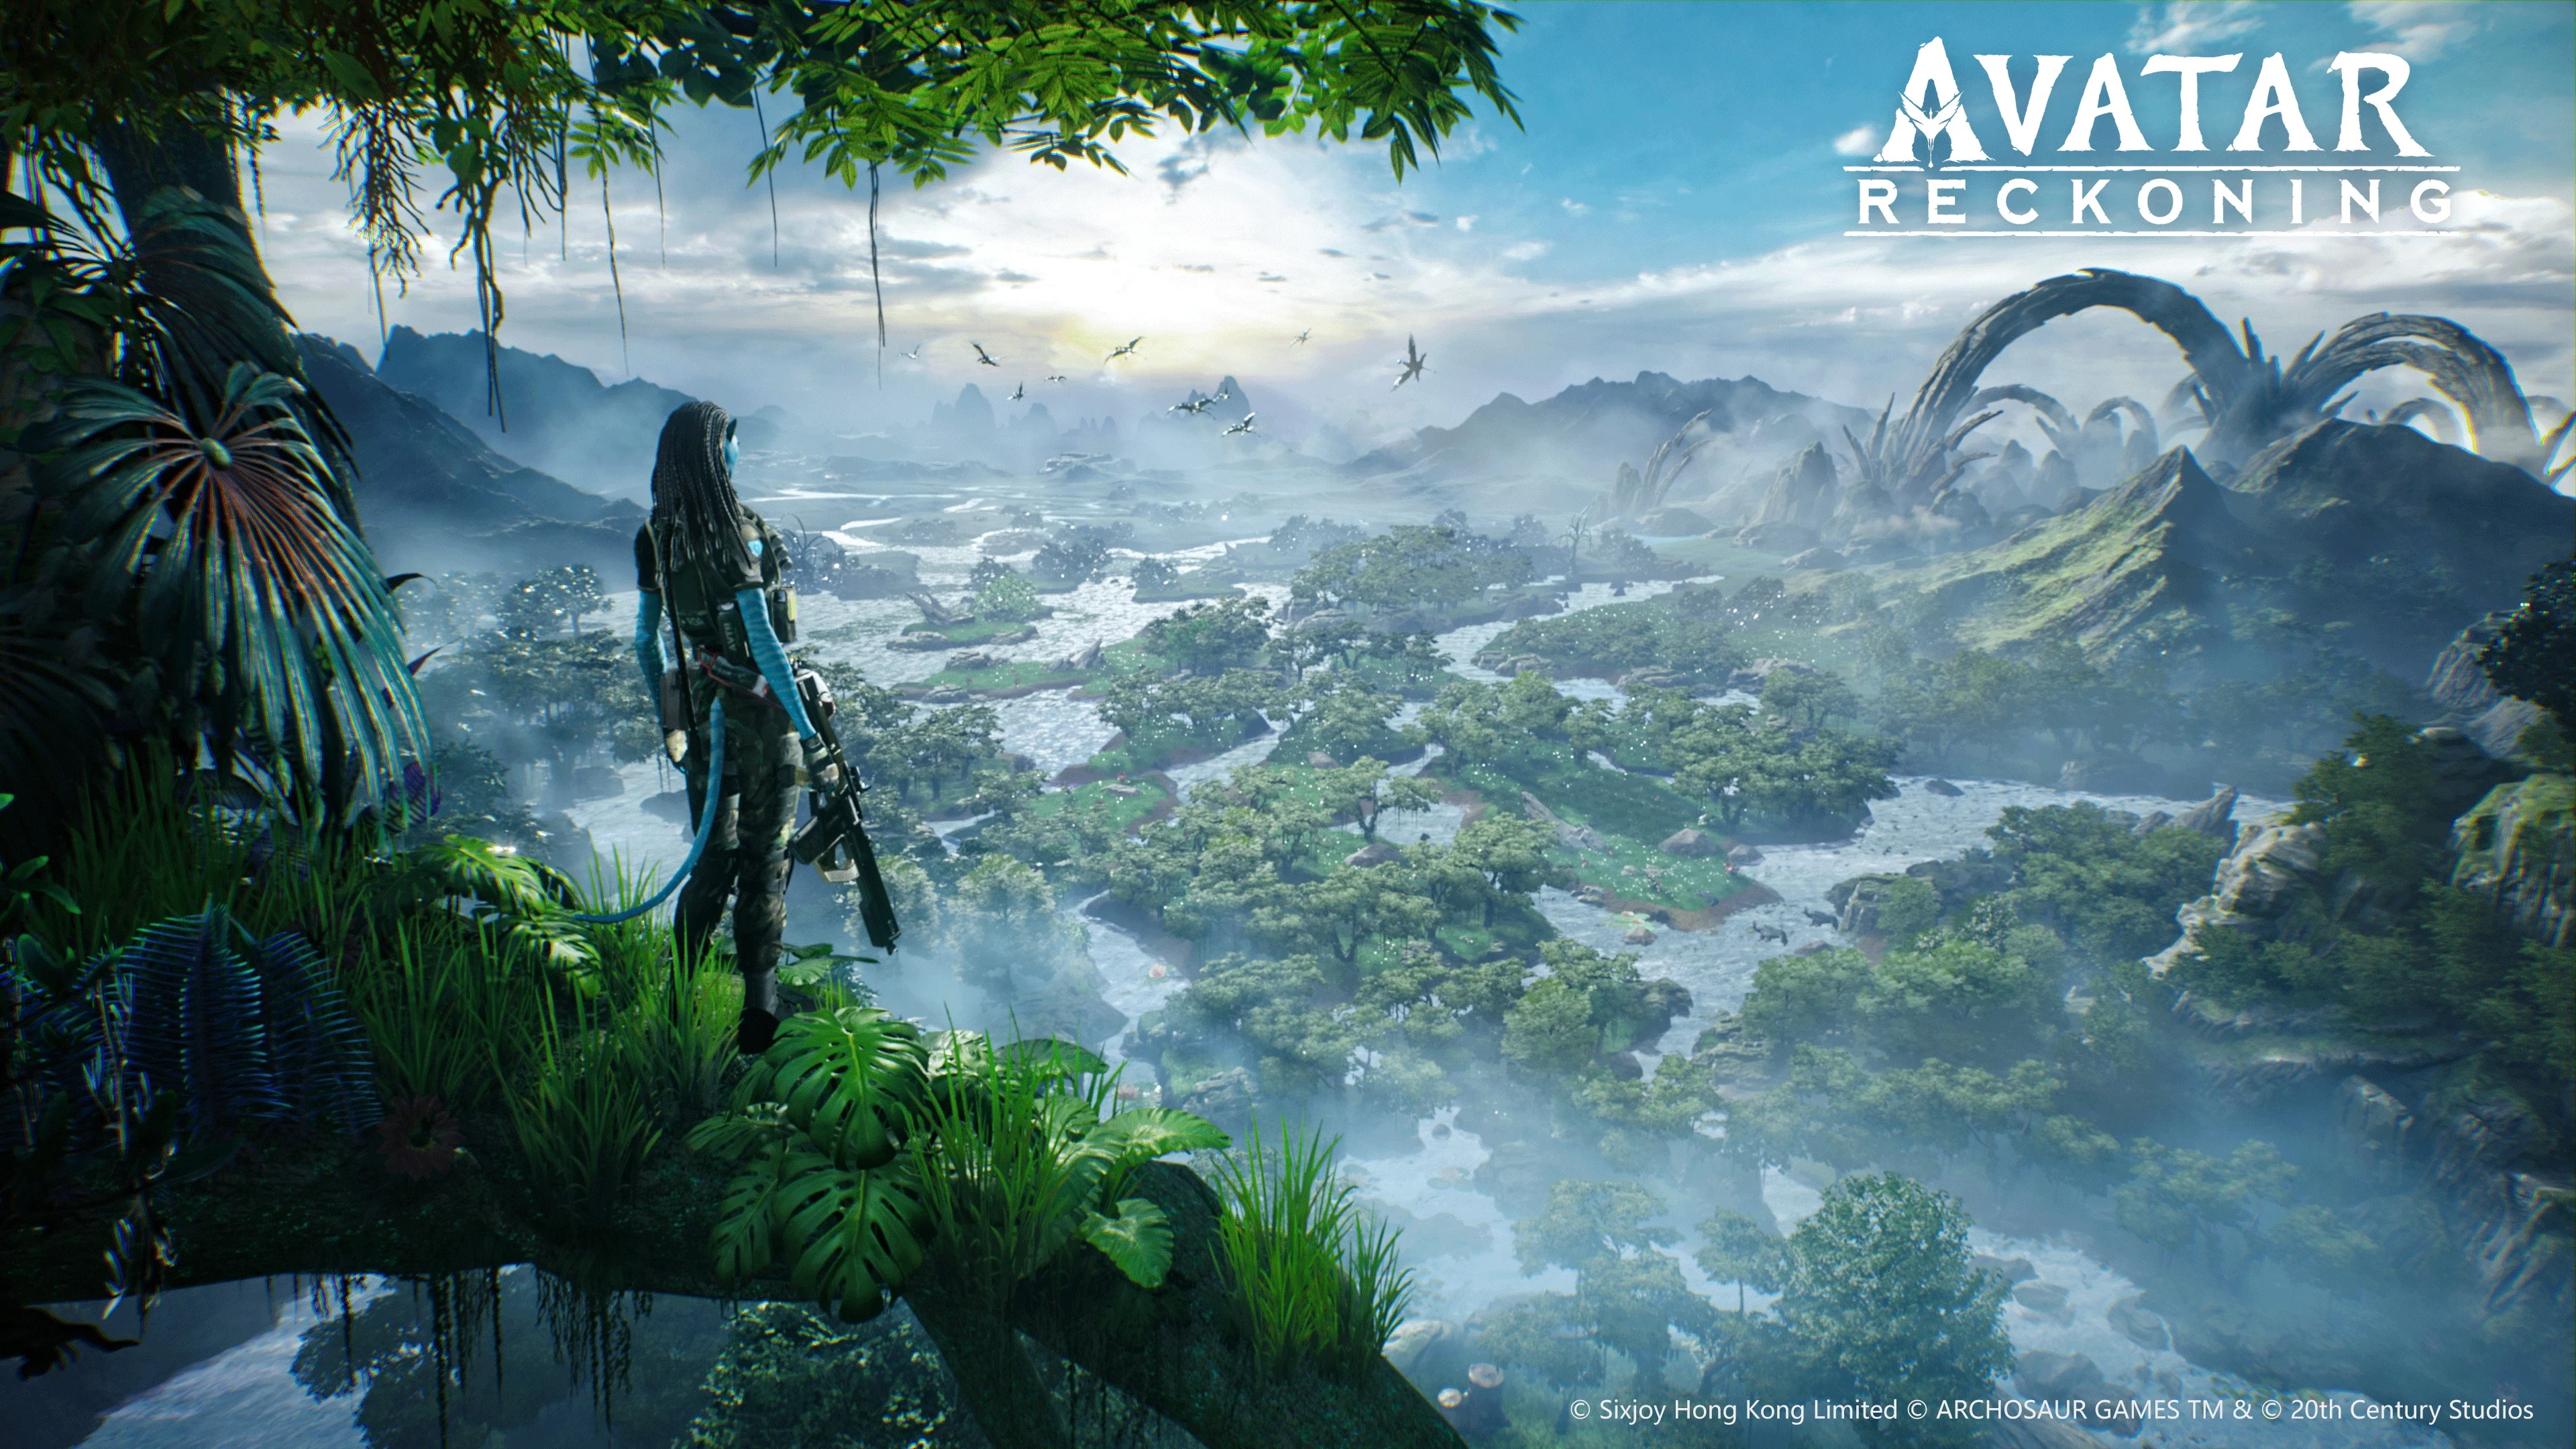 Annunciato Avatar: Reconing - un gioco per cellulare su Pandora